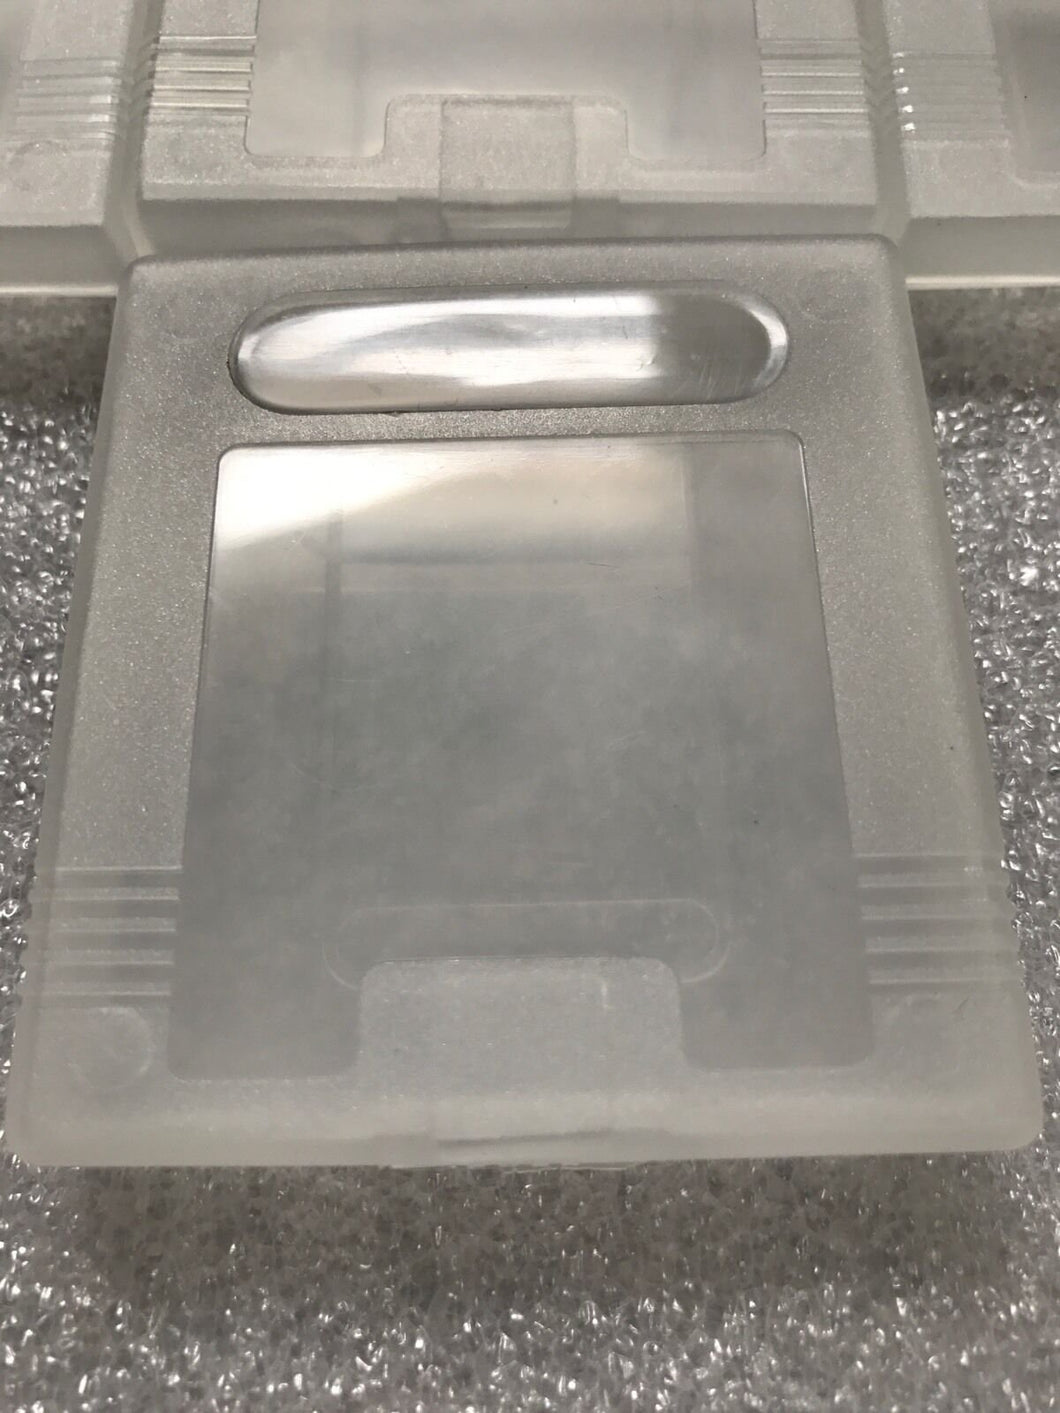 10 For Nintendo Game Boy DMG Original Gameboy Cartridge Cases / Dust Covers GBC